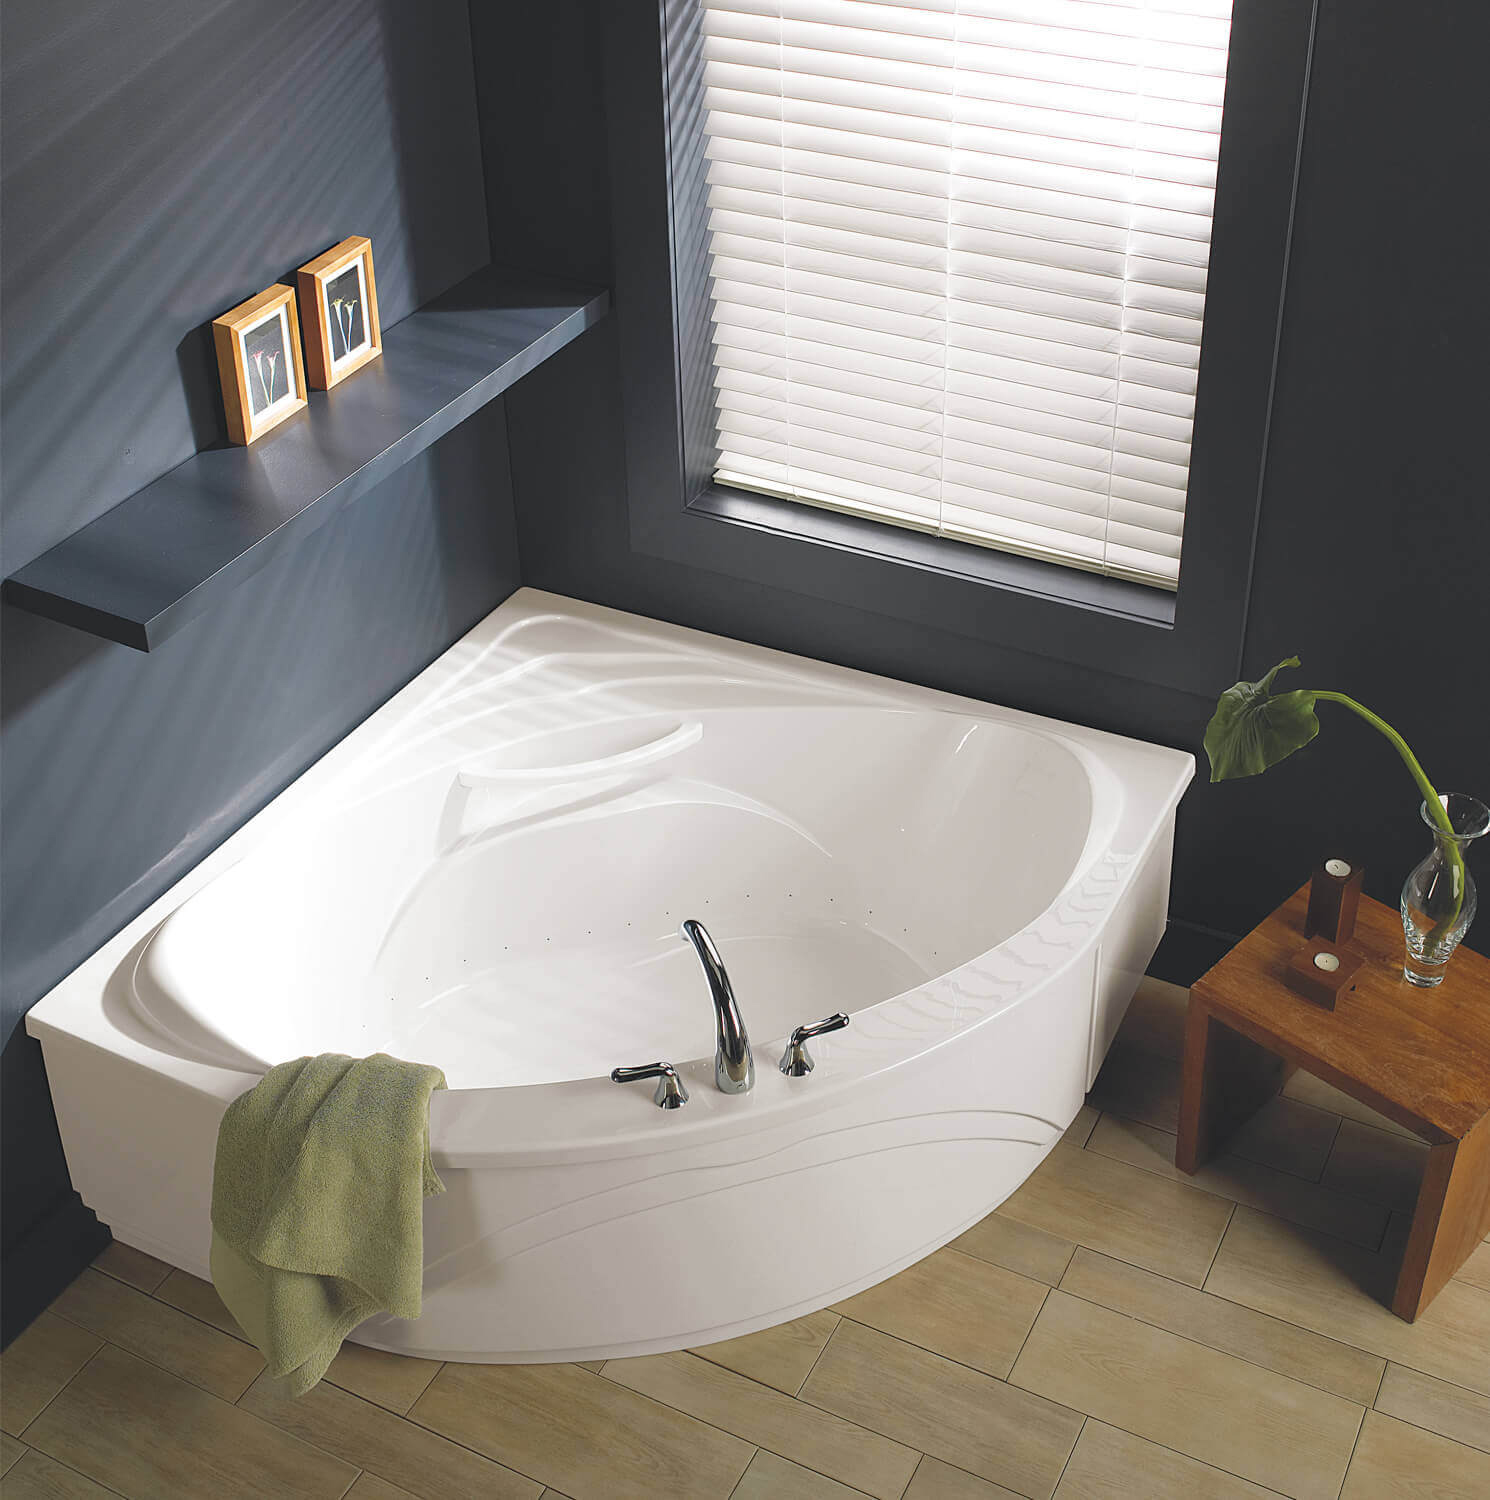 Bainultra Sensation corner drop-in air jet bathtub for your master bathroom